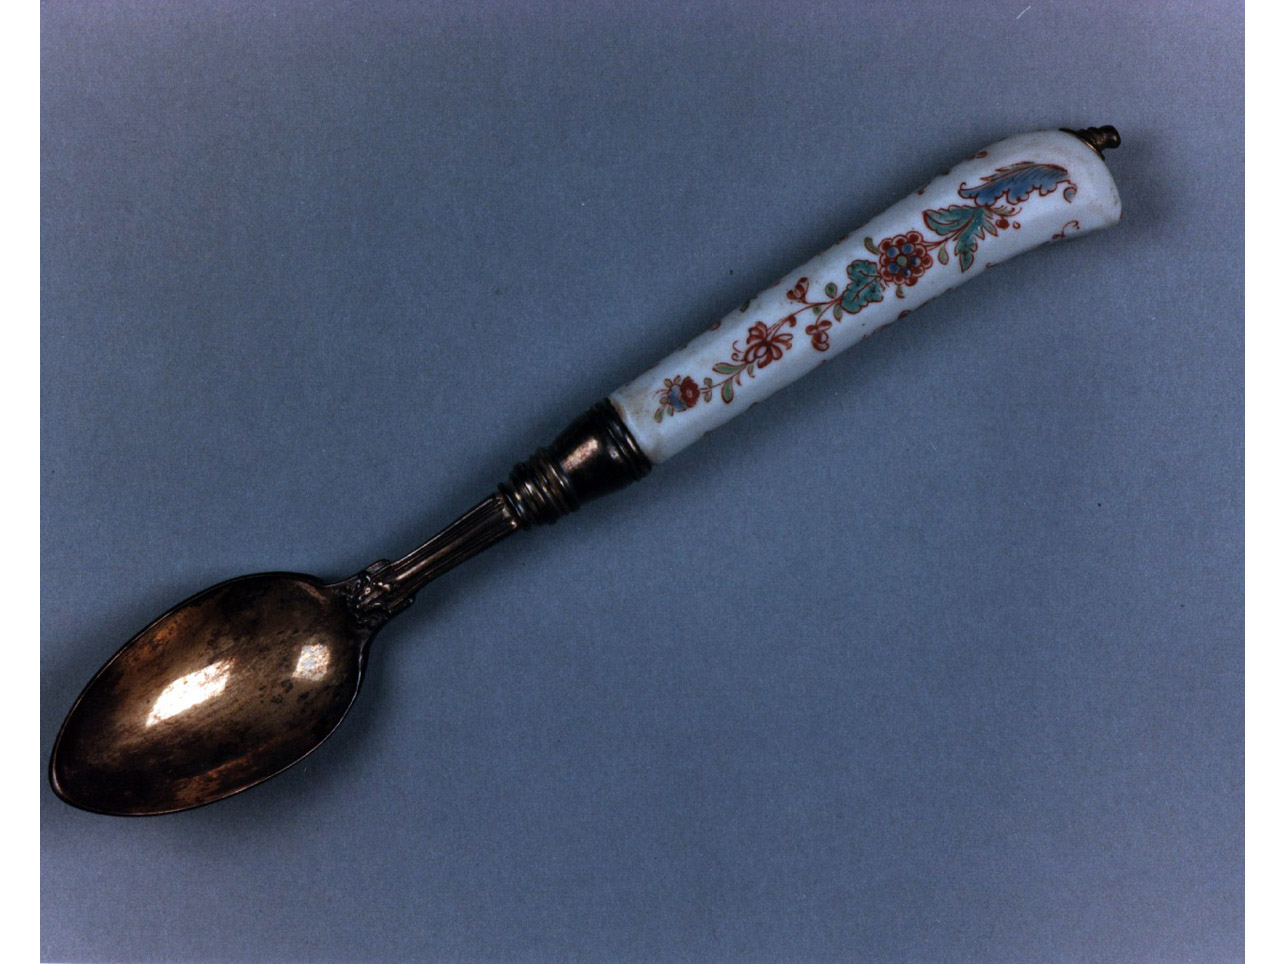 motivi decorativi floreali (cucchiaio) - produzione di Chantilly (sec. XVIII)